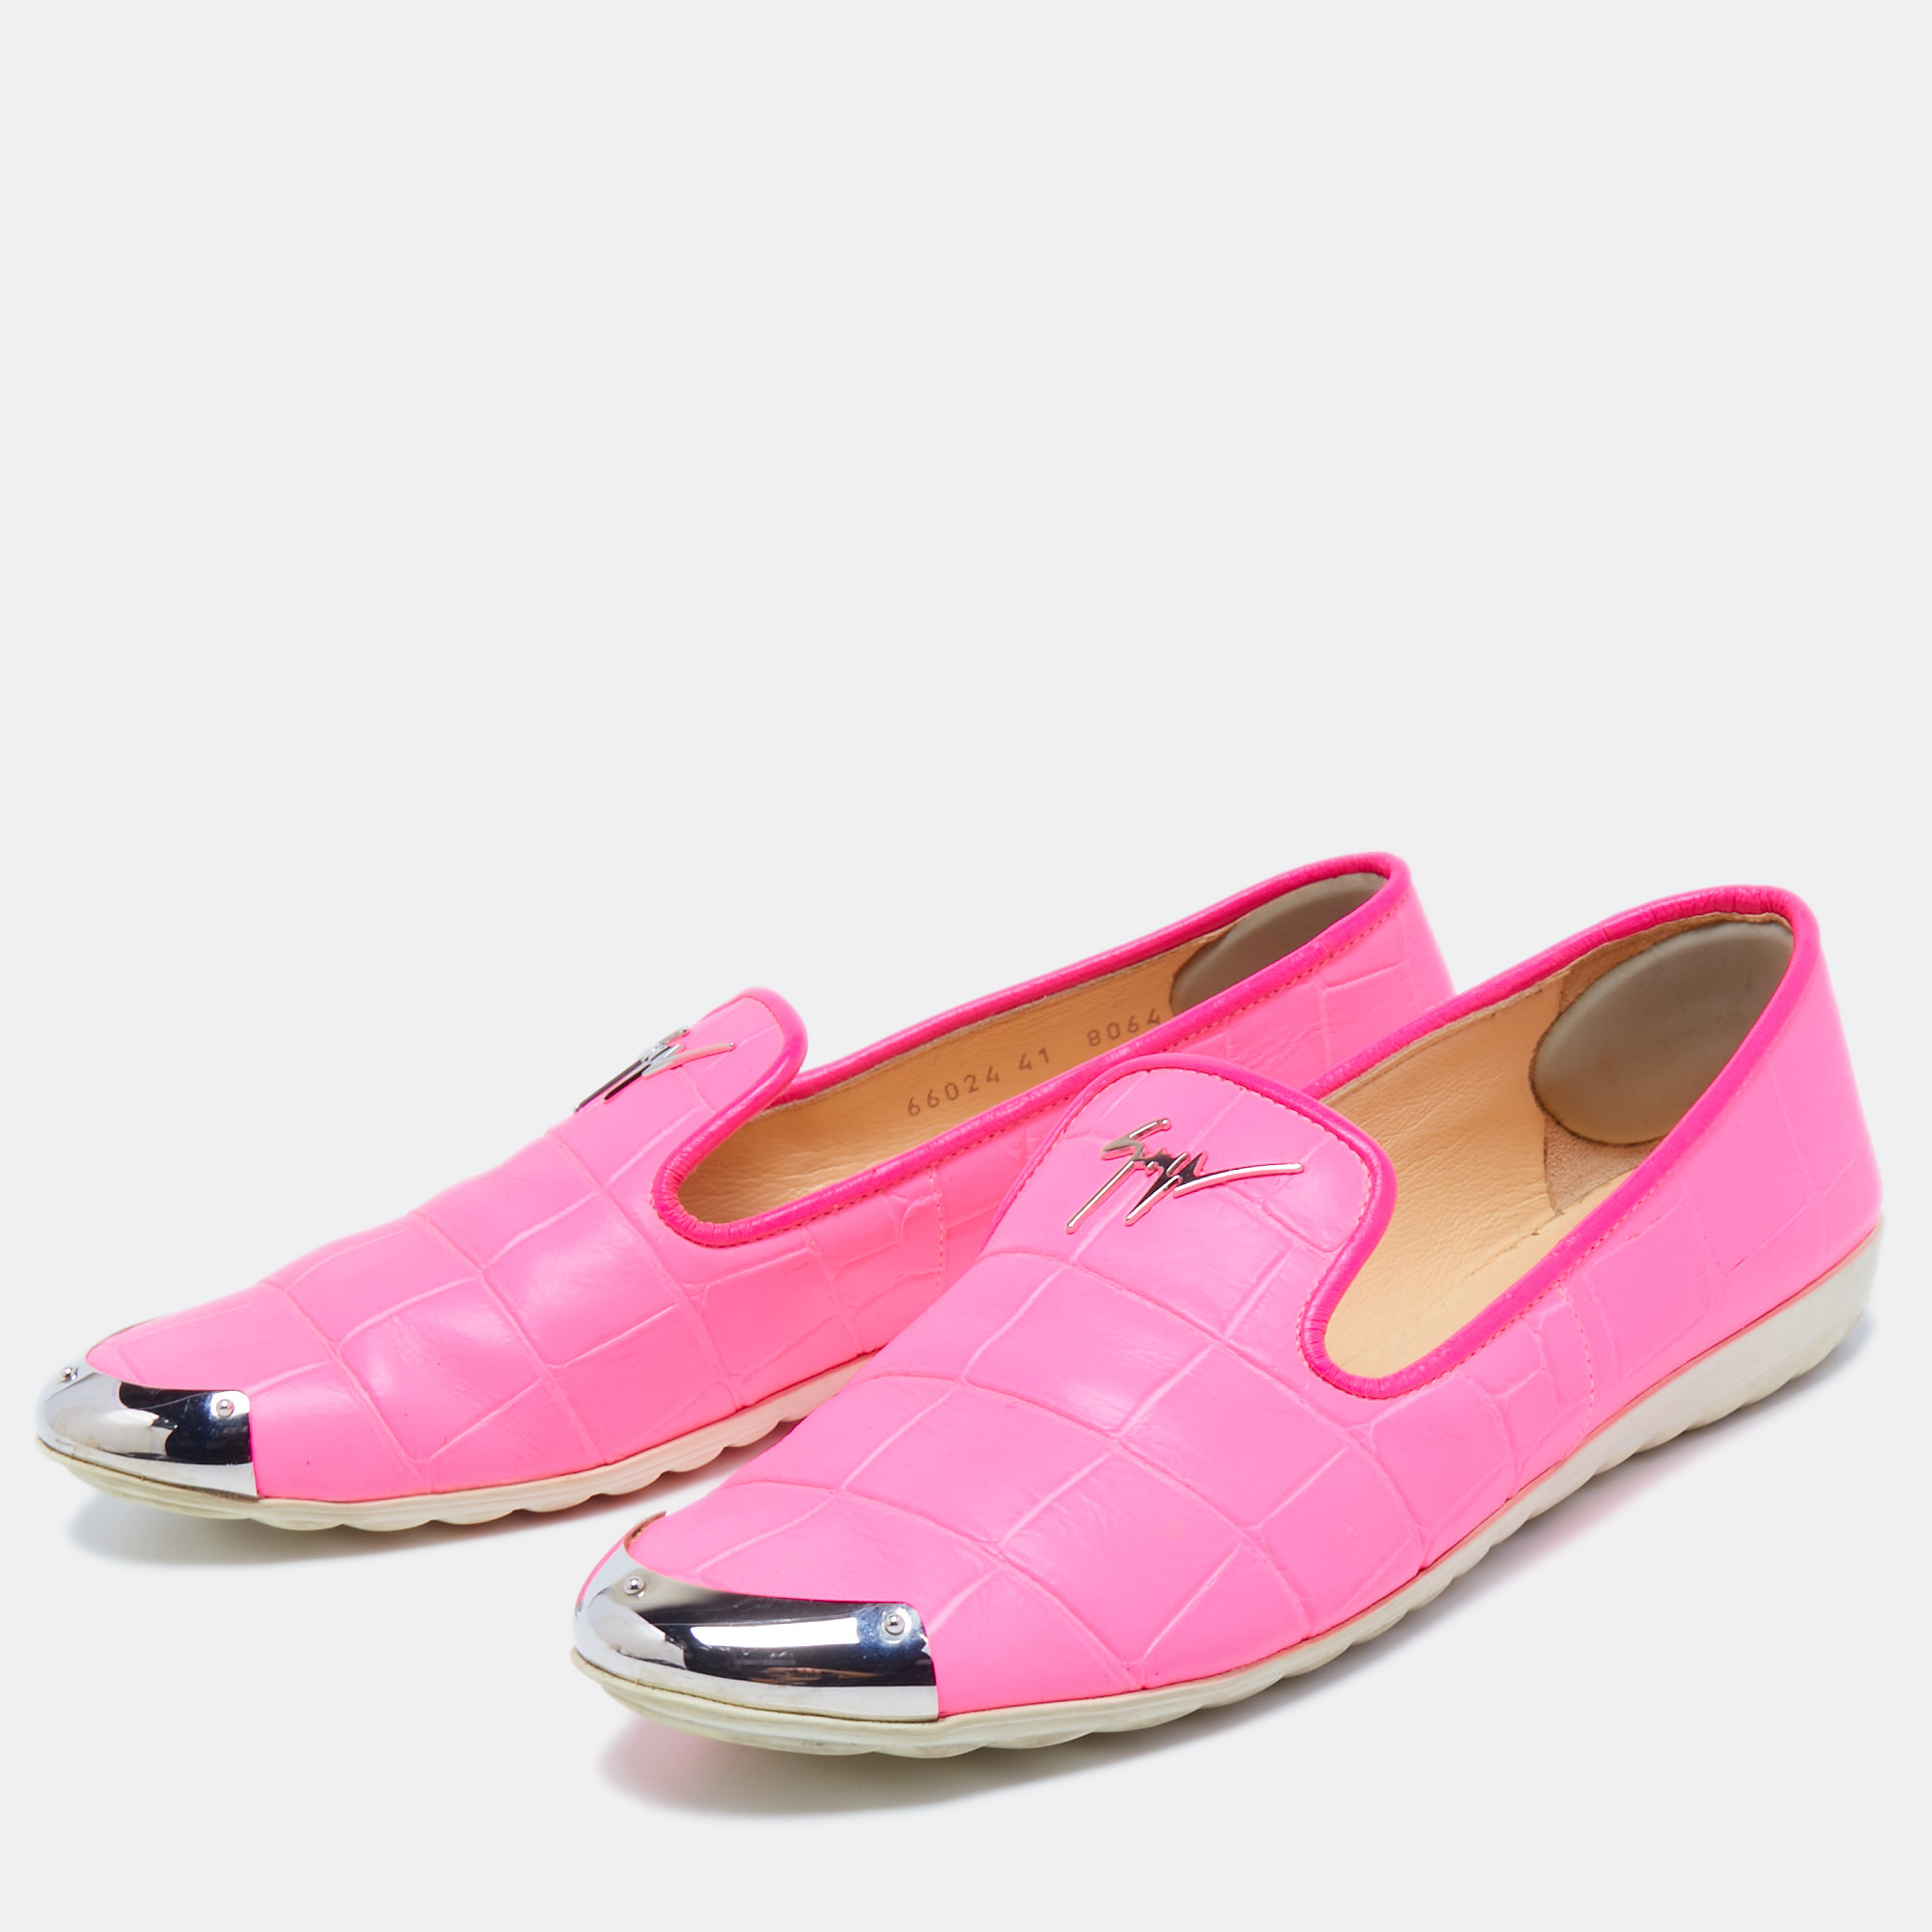 

Giuseppe Zanotti Pink Croc Embossed Leather Smoking Slippers Size